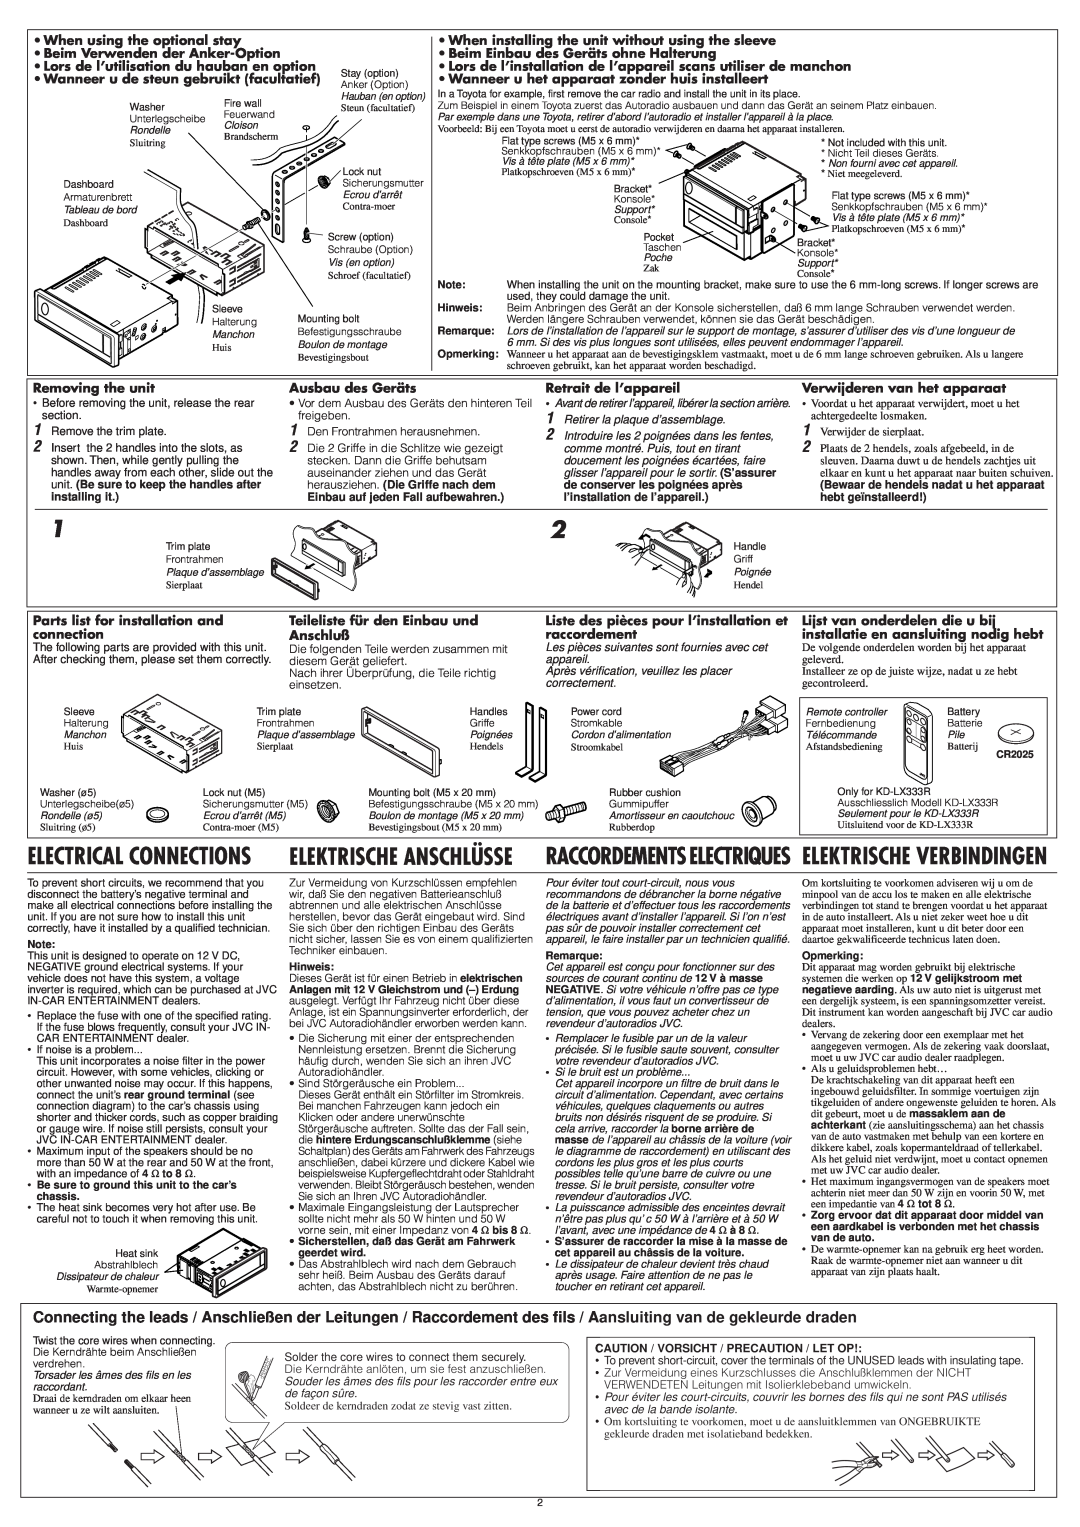 JVC PIM171200 manual Electrical Connections, Elektrische Anschlüsse 